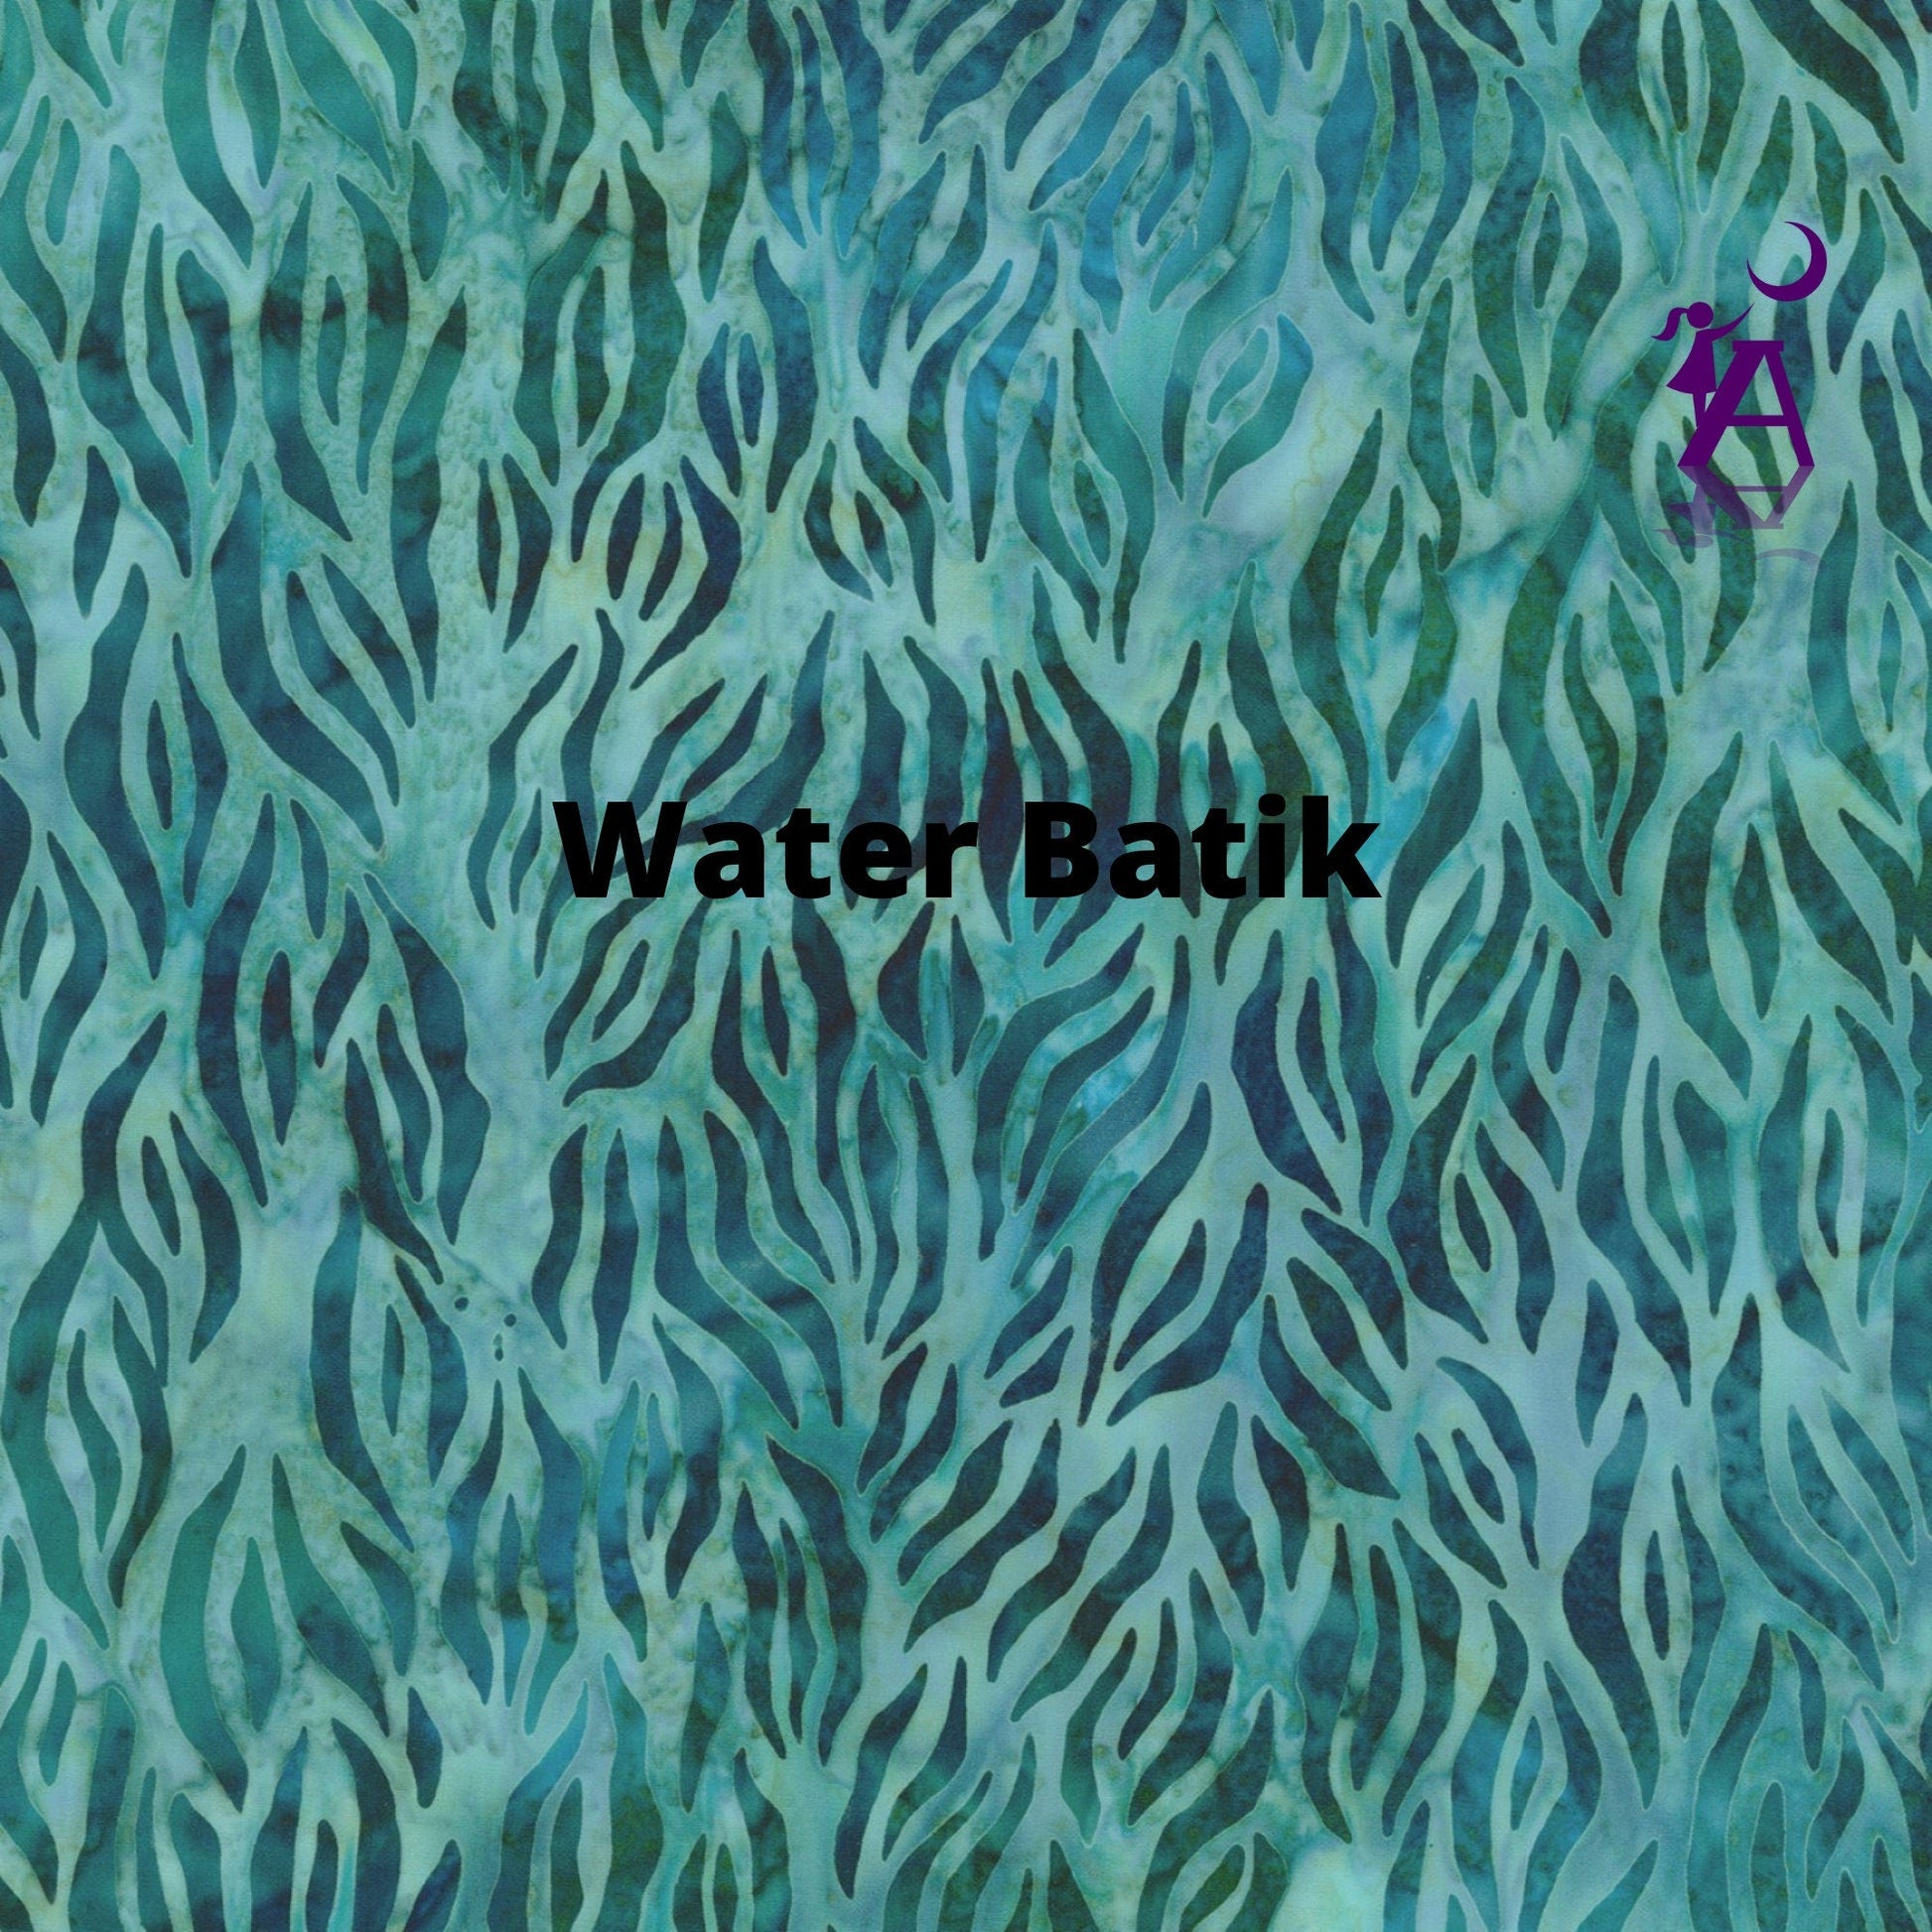 Robert Kaufman Fabric 1 yard (36"x44") / Green Batik prints by Anthology Plum Jacqueline & Robert Kaufman Green Water batik cotton fabric